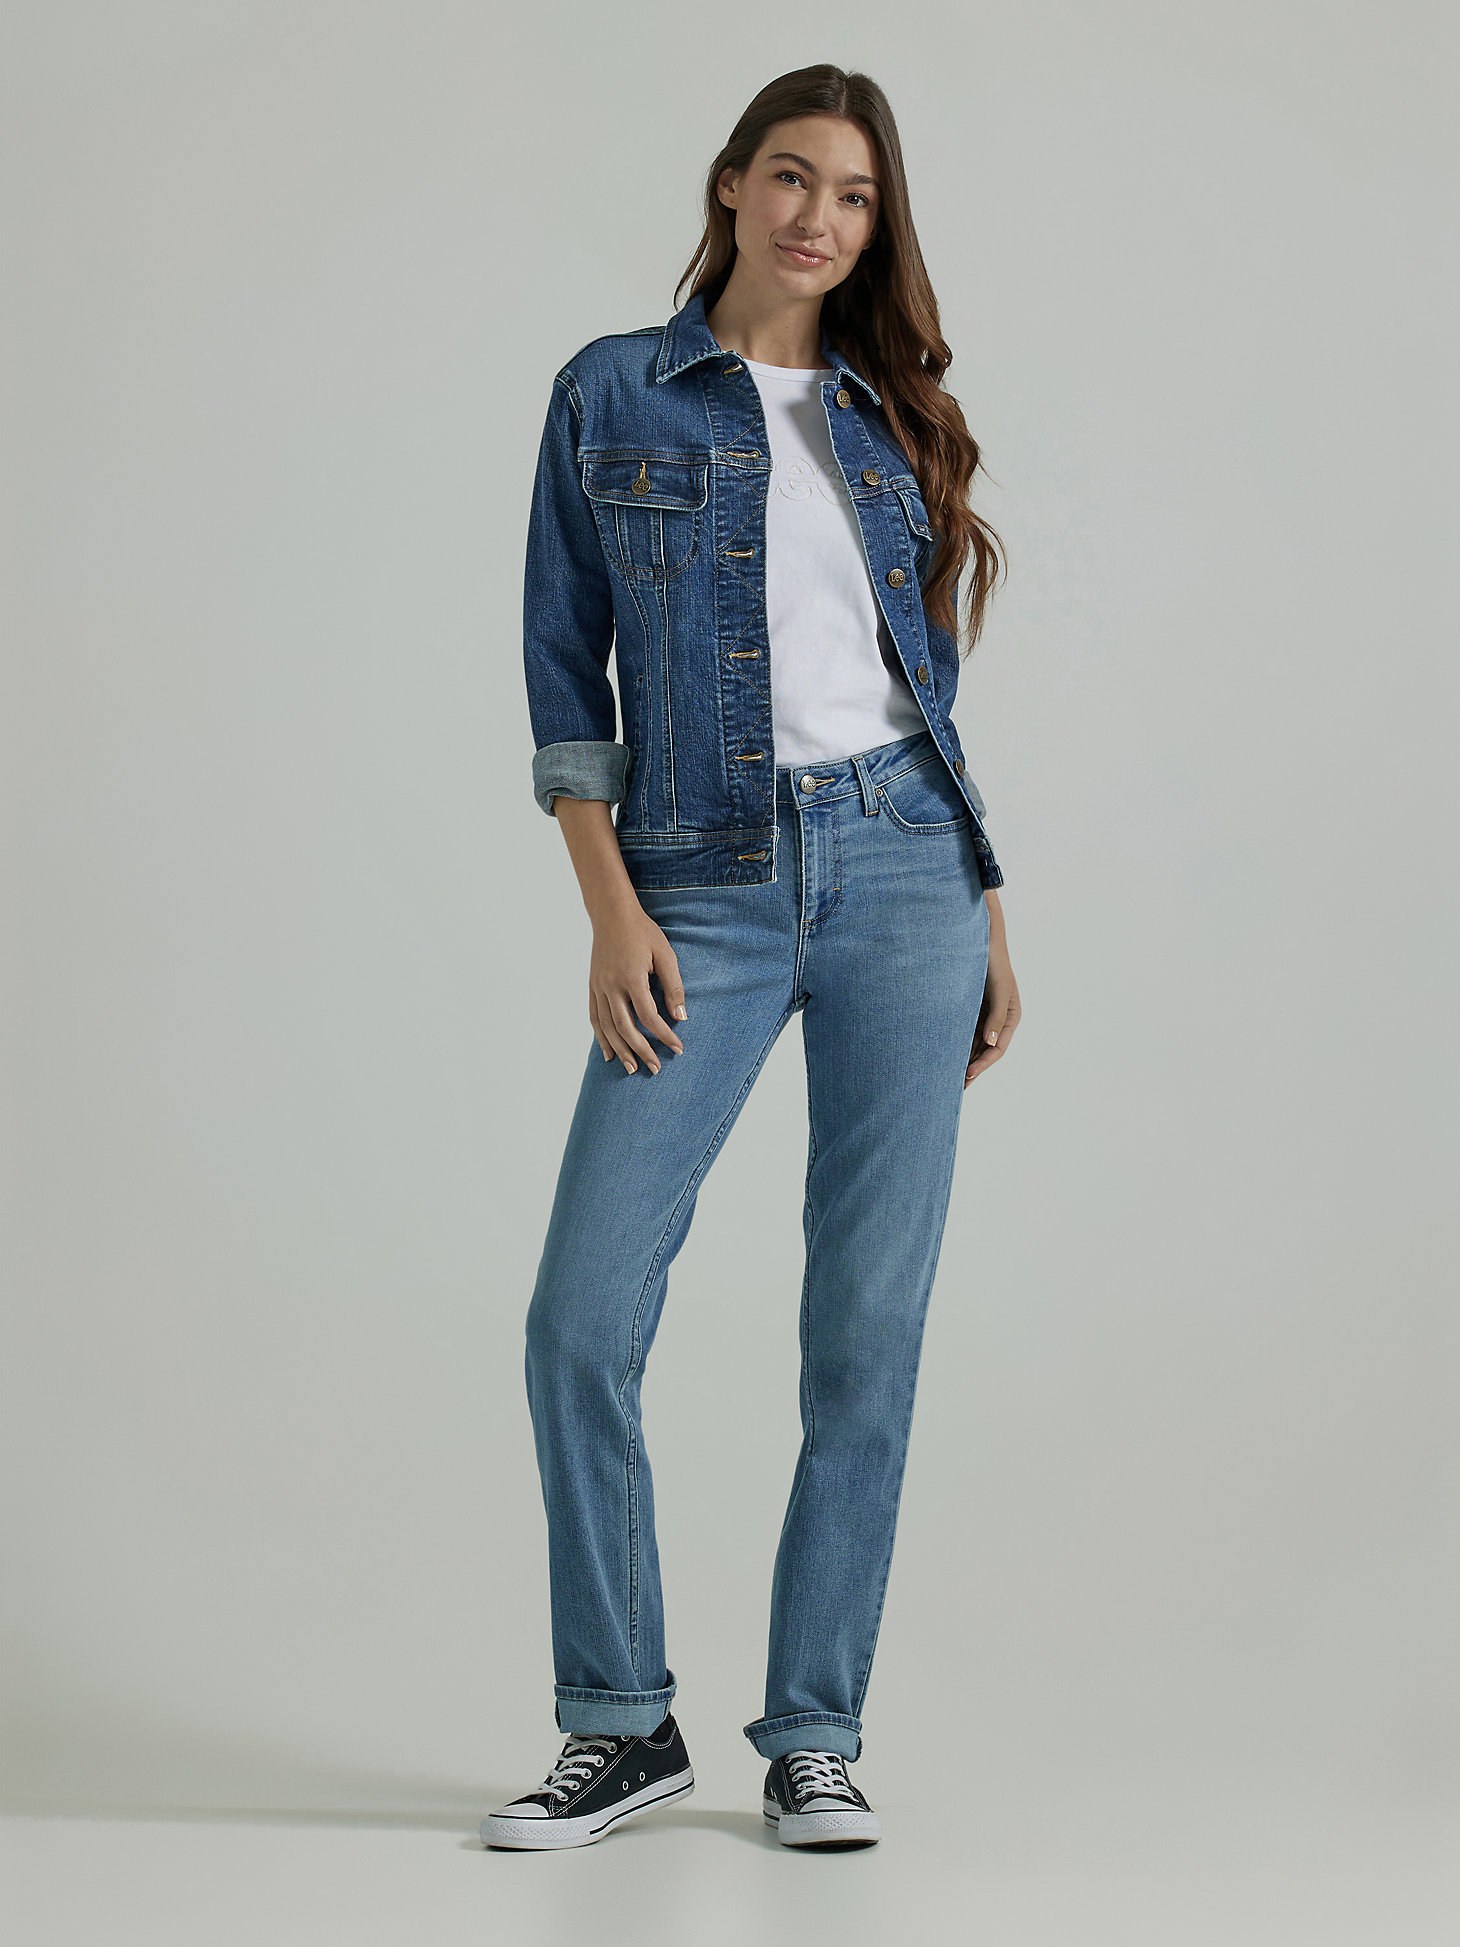 Women's Legendary Regular Straight Jean in With Purpose Blue alternative view 1